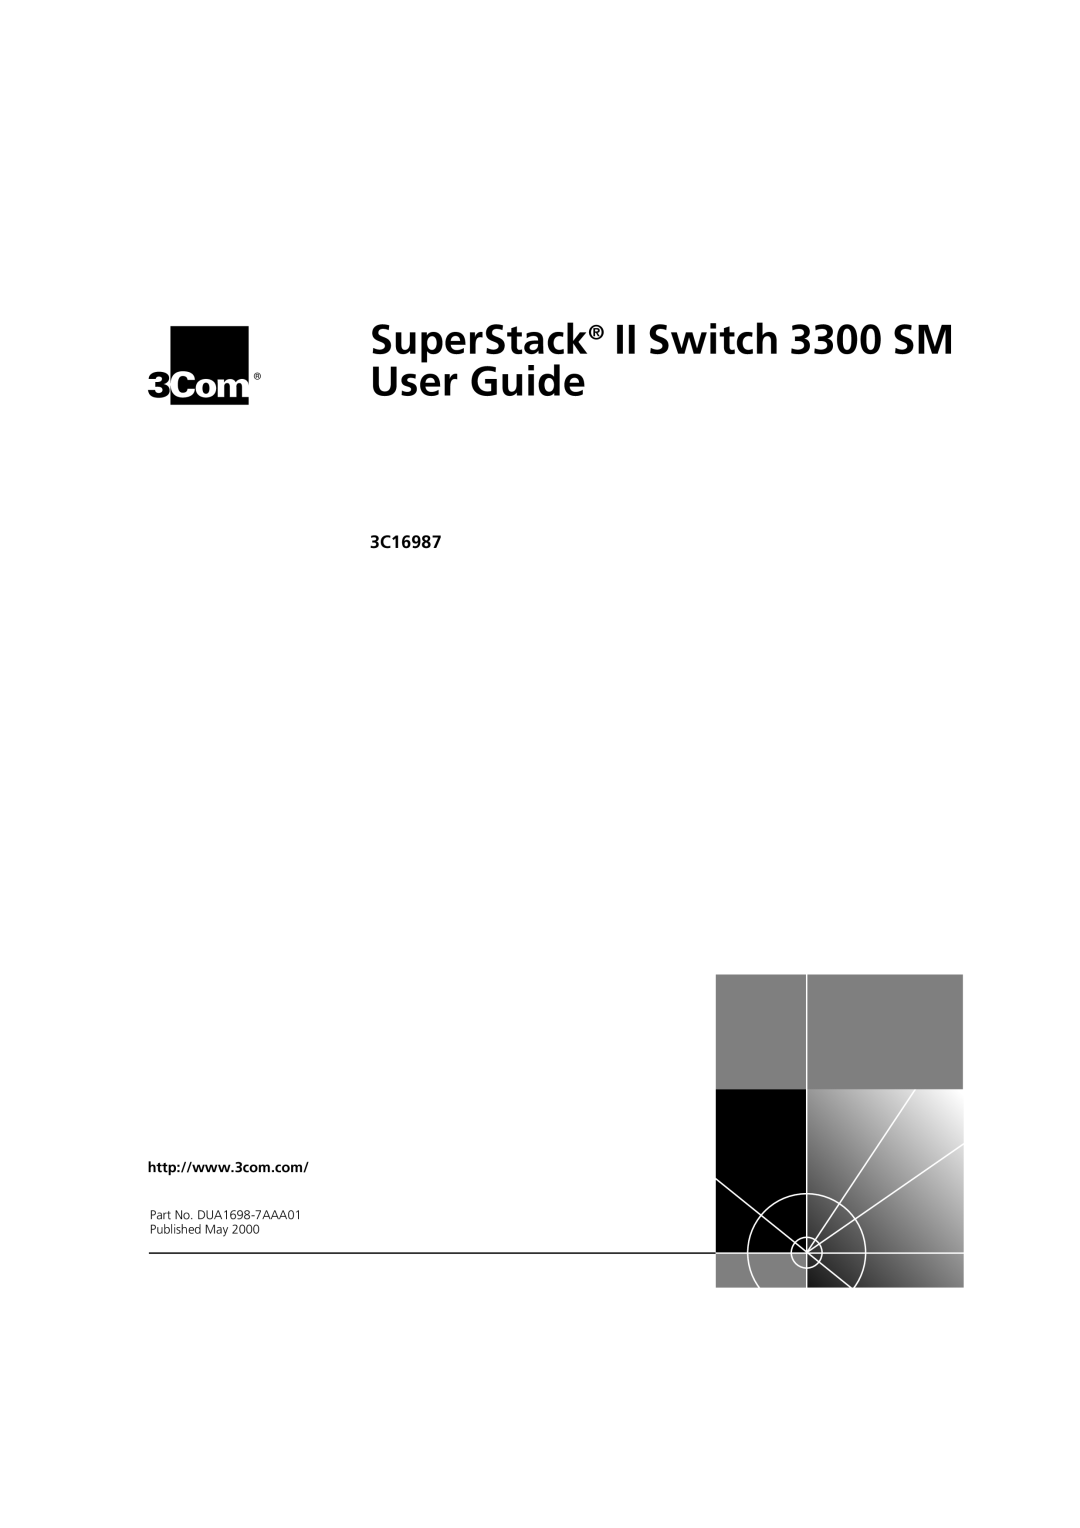 3Com 3C16987 manual User Guide, SuperStack II Switch 3300 SM 